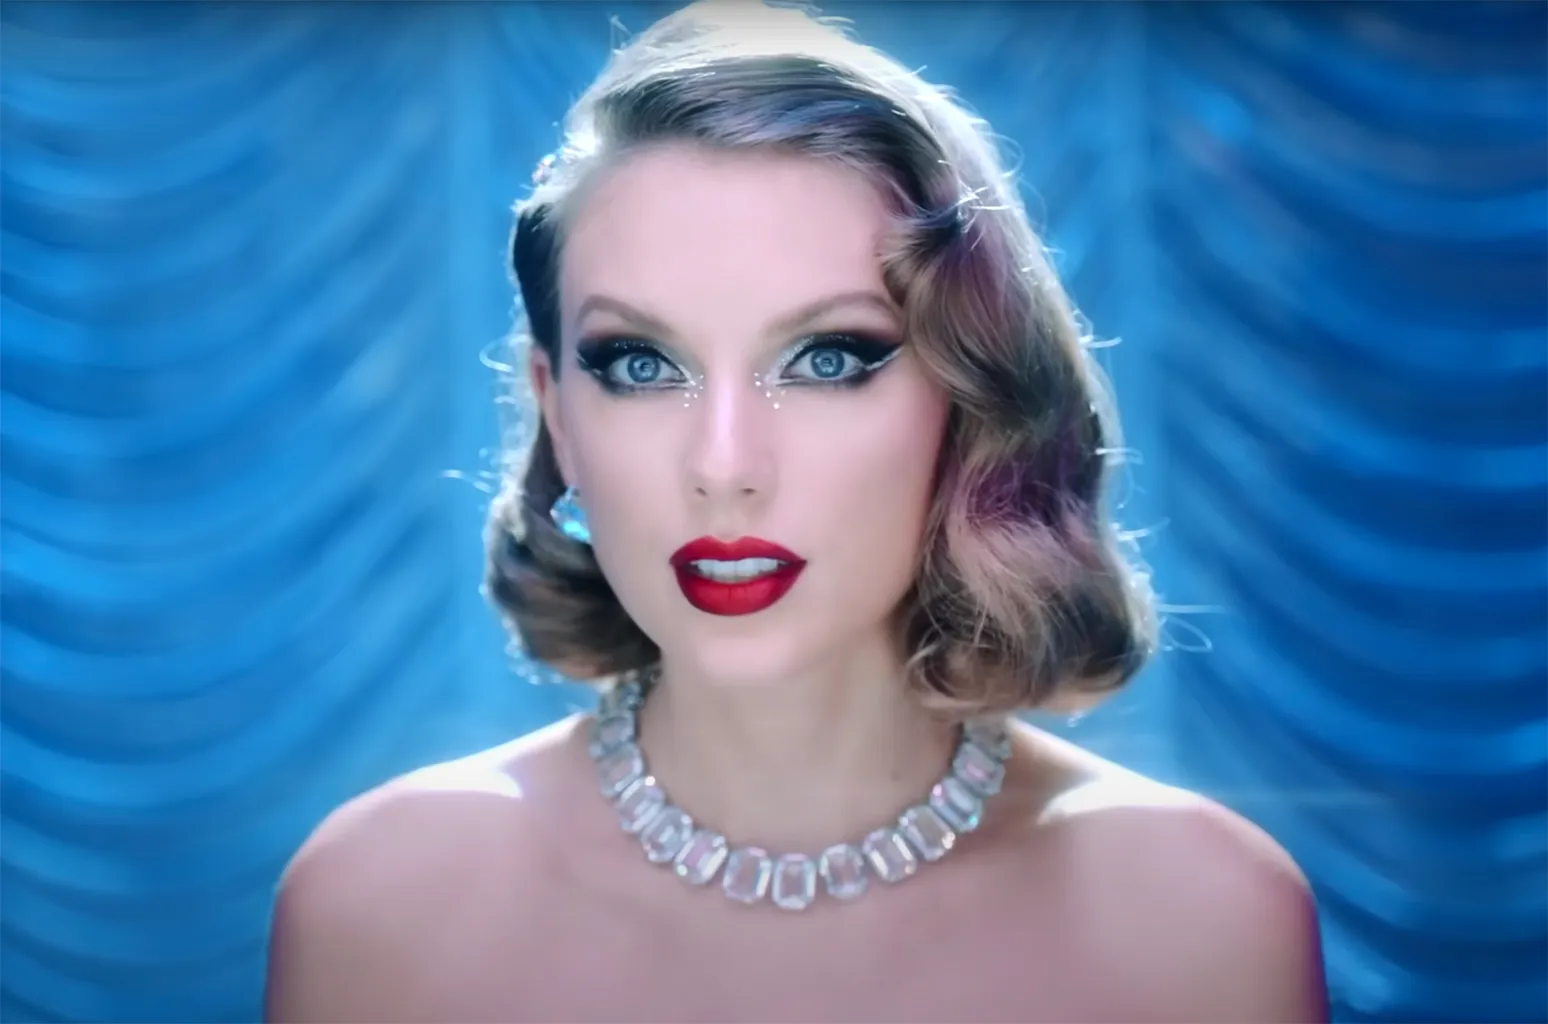 Gemstones In Music Videos - Symbolism And Fashion